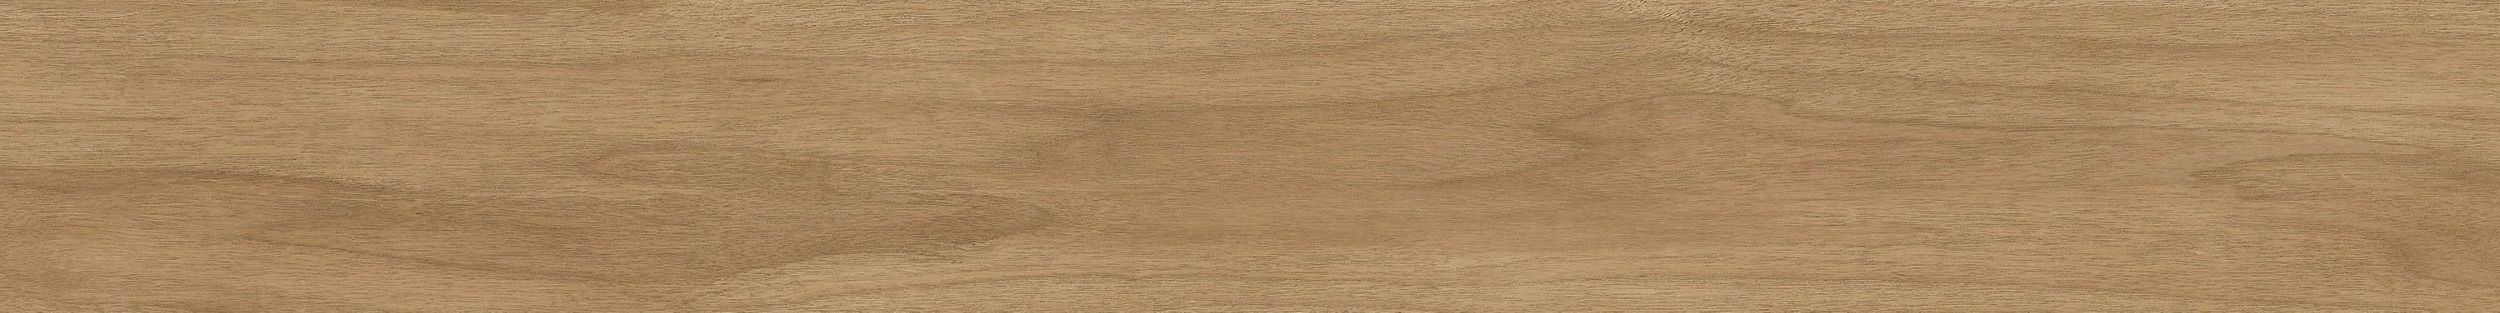 Criterion Classic Woodgrains LVT In Washed Maple imagen número 2